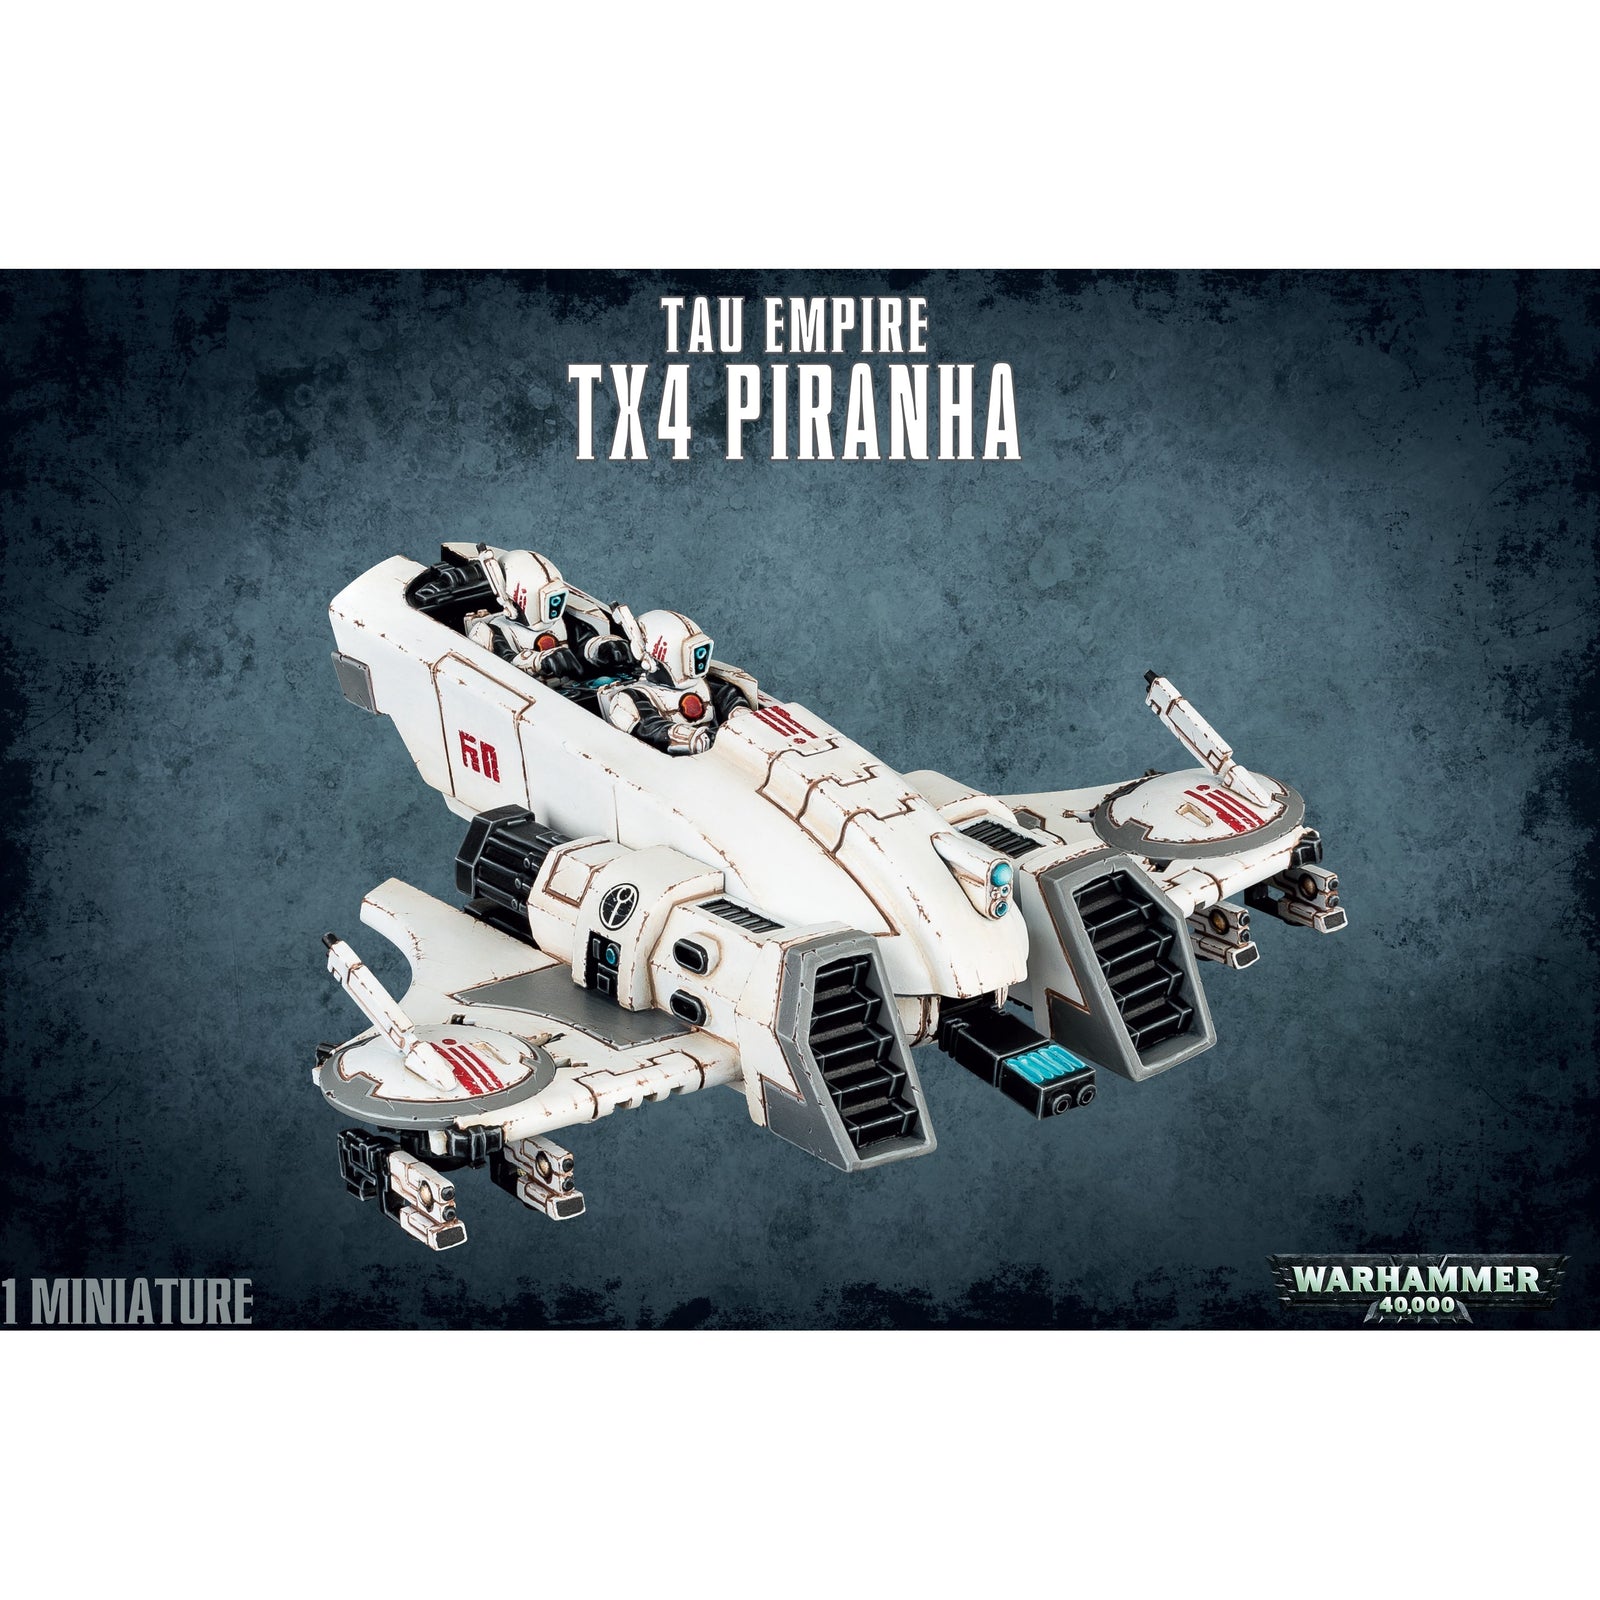 Box image for TX4 Piranha